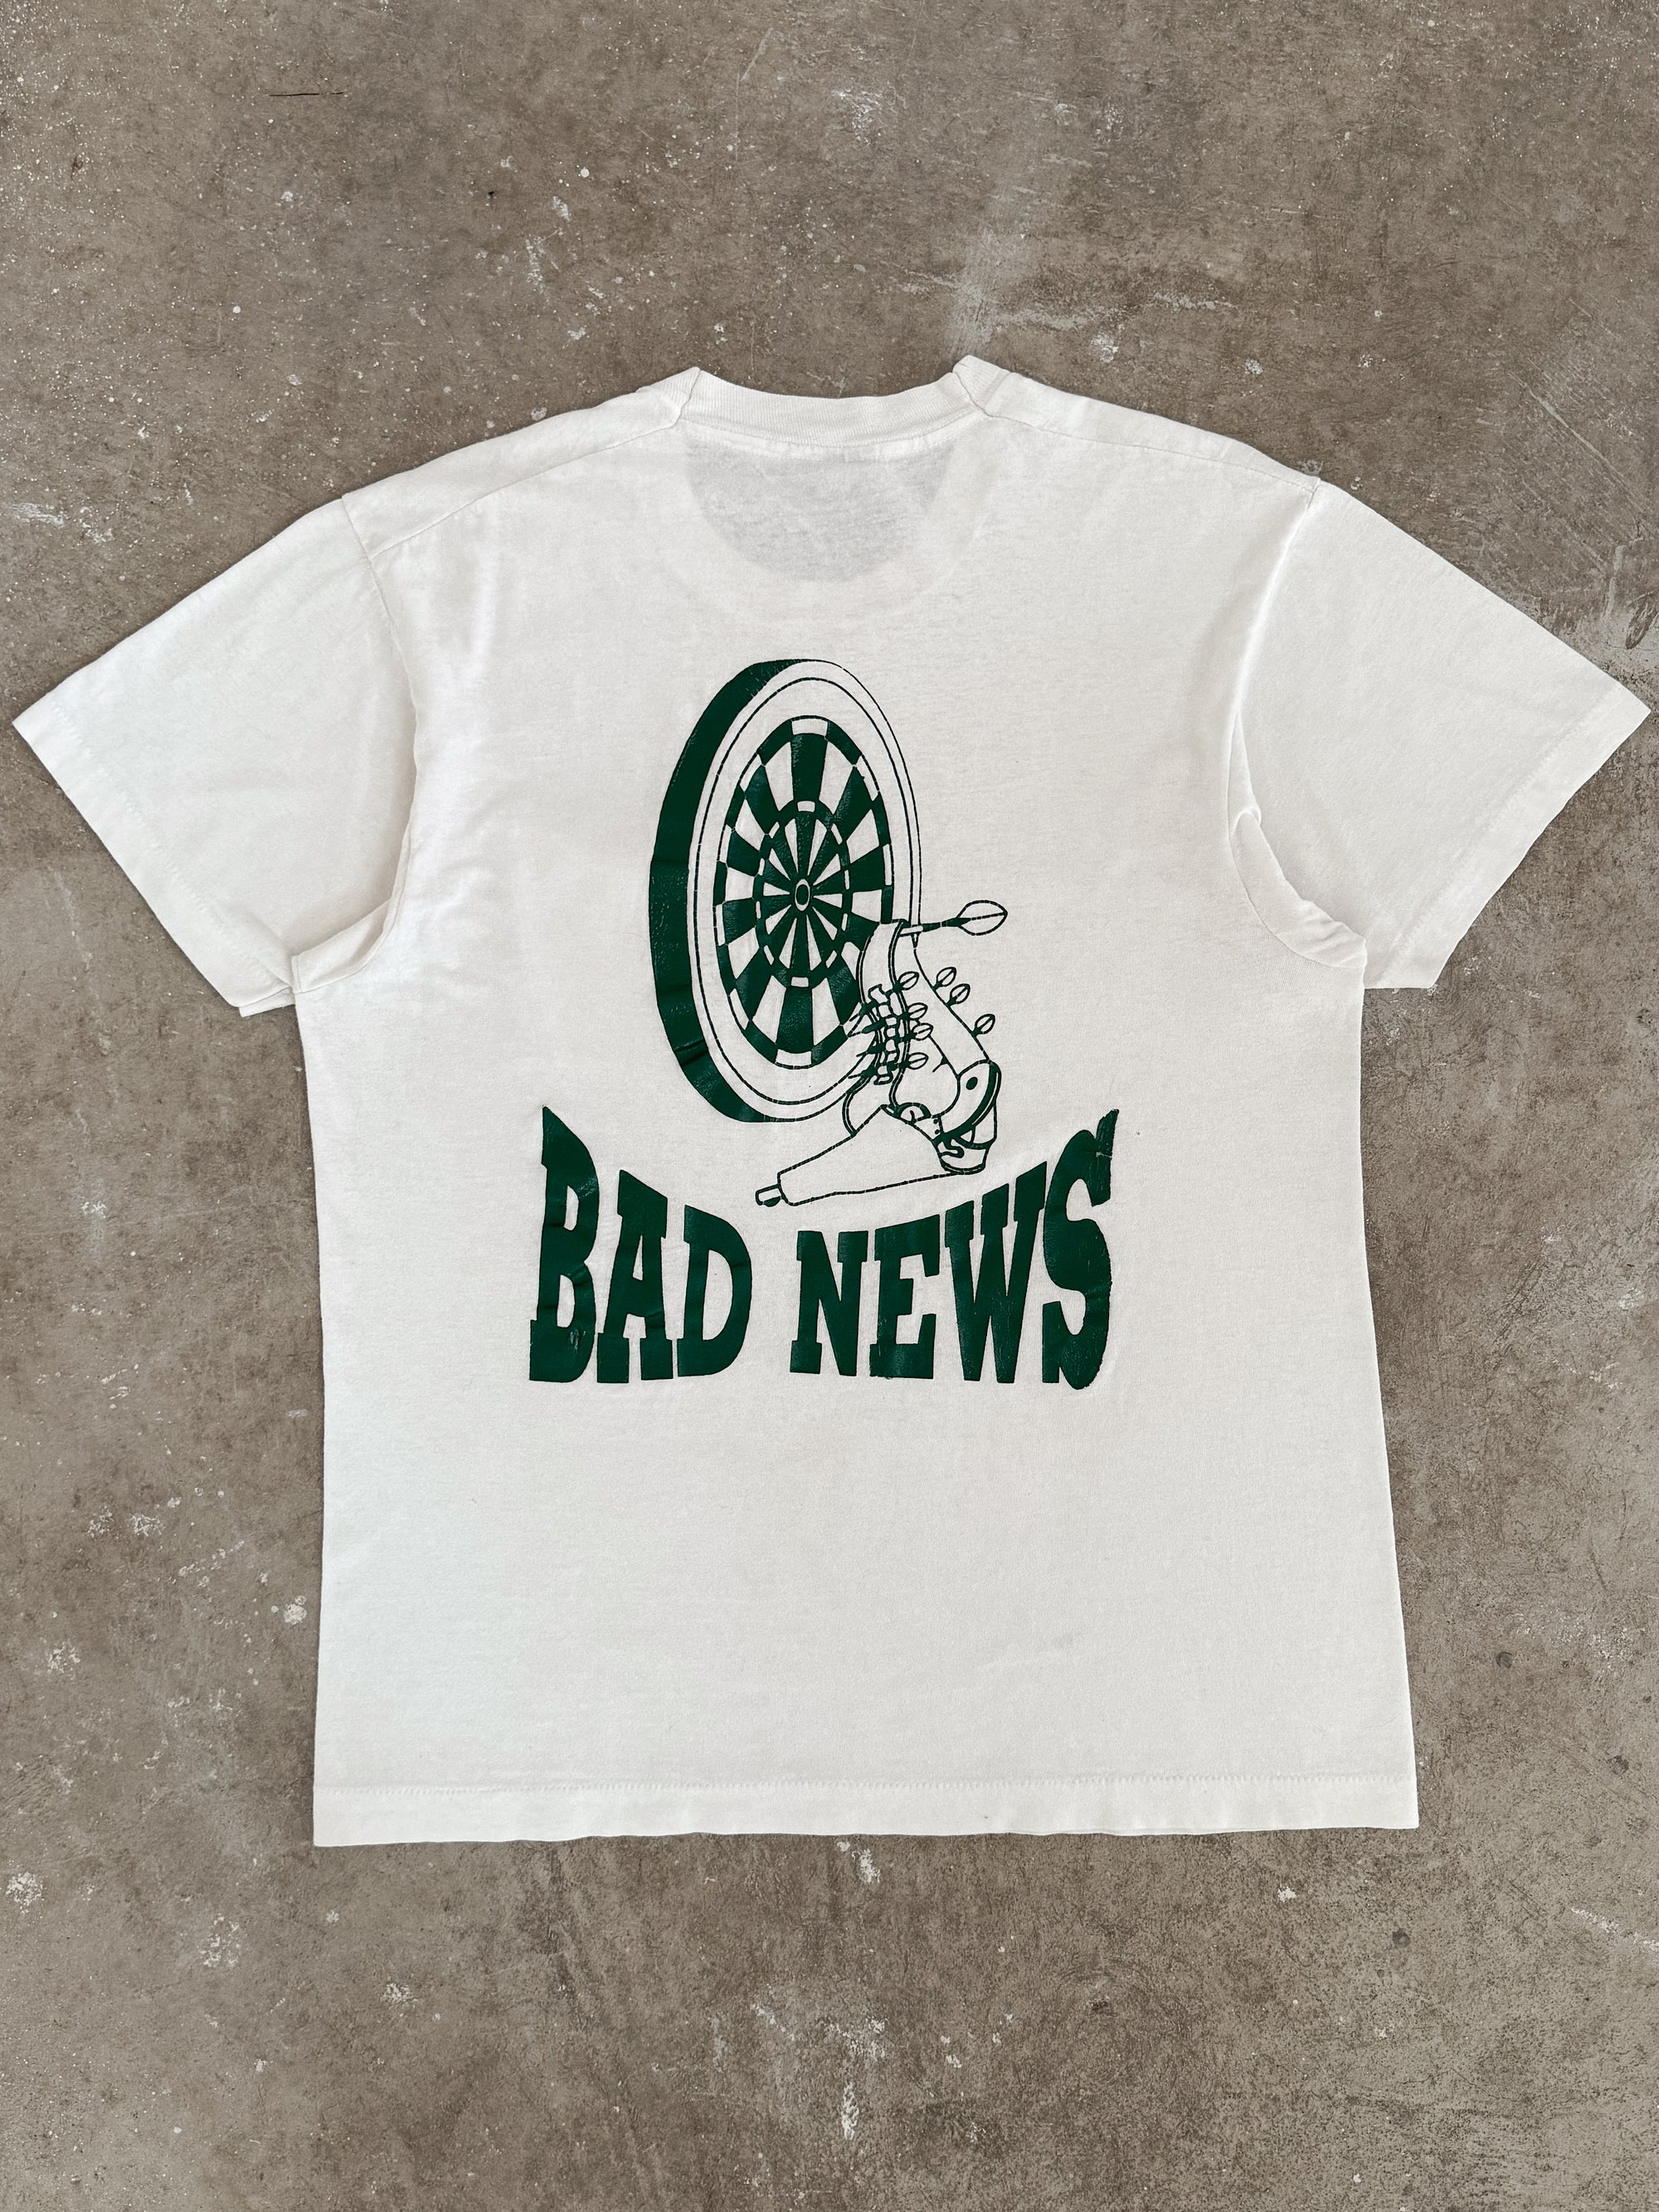 1980s "Bad News" Tee (M)